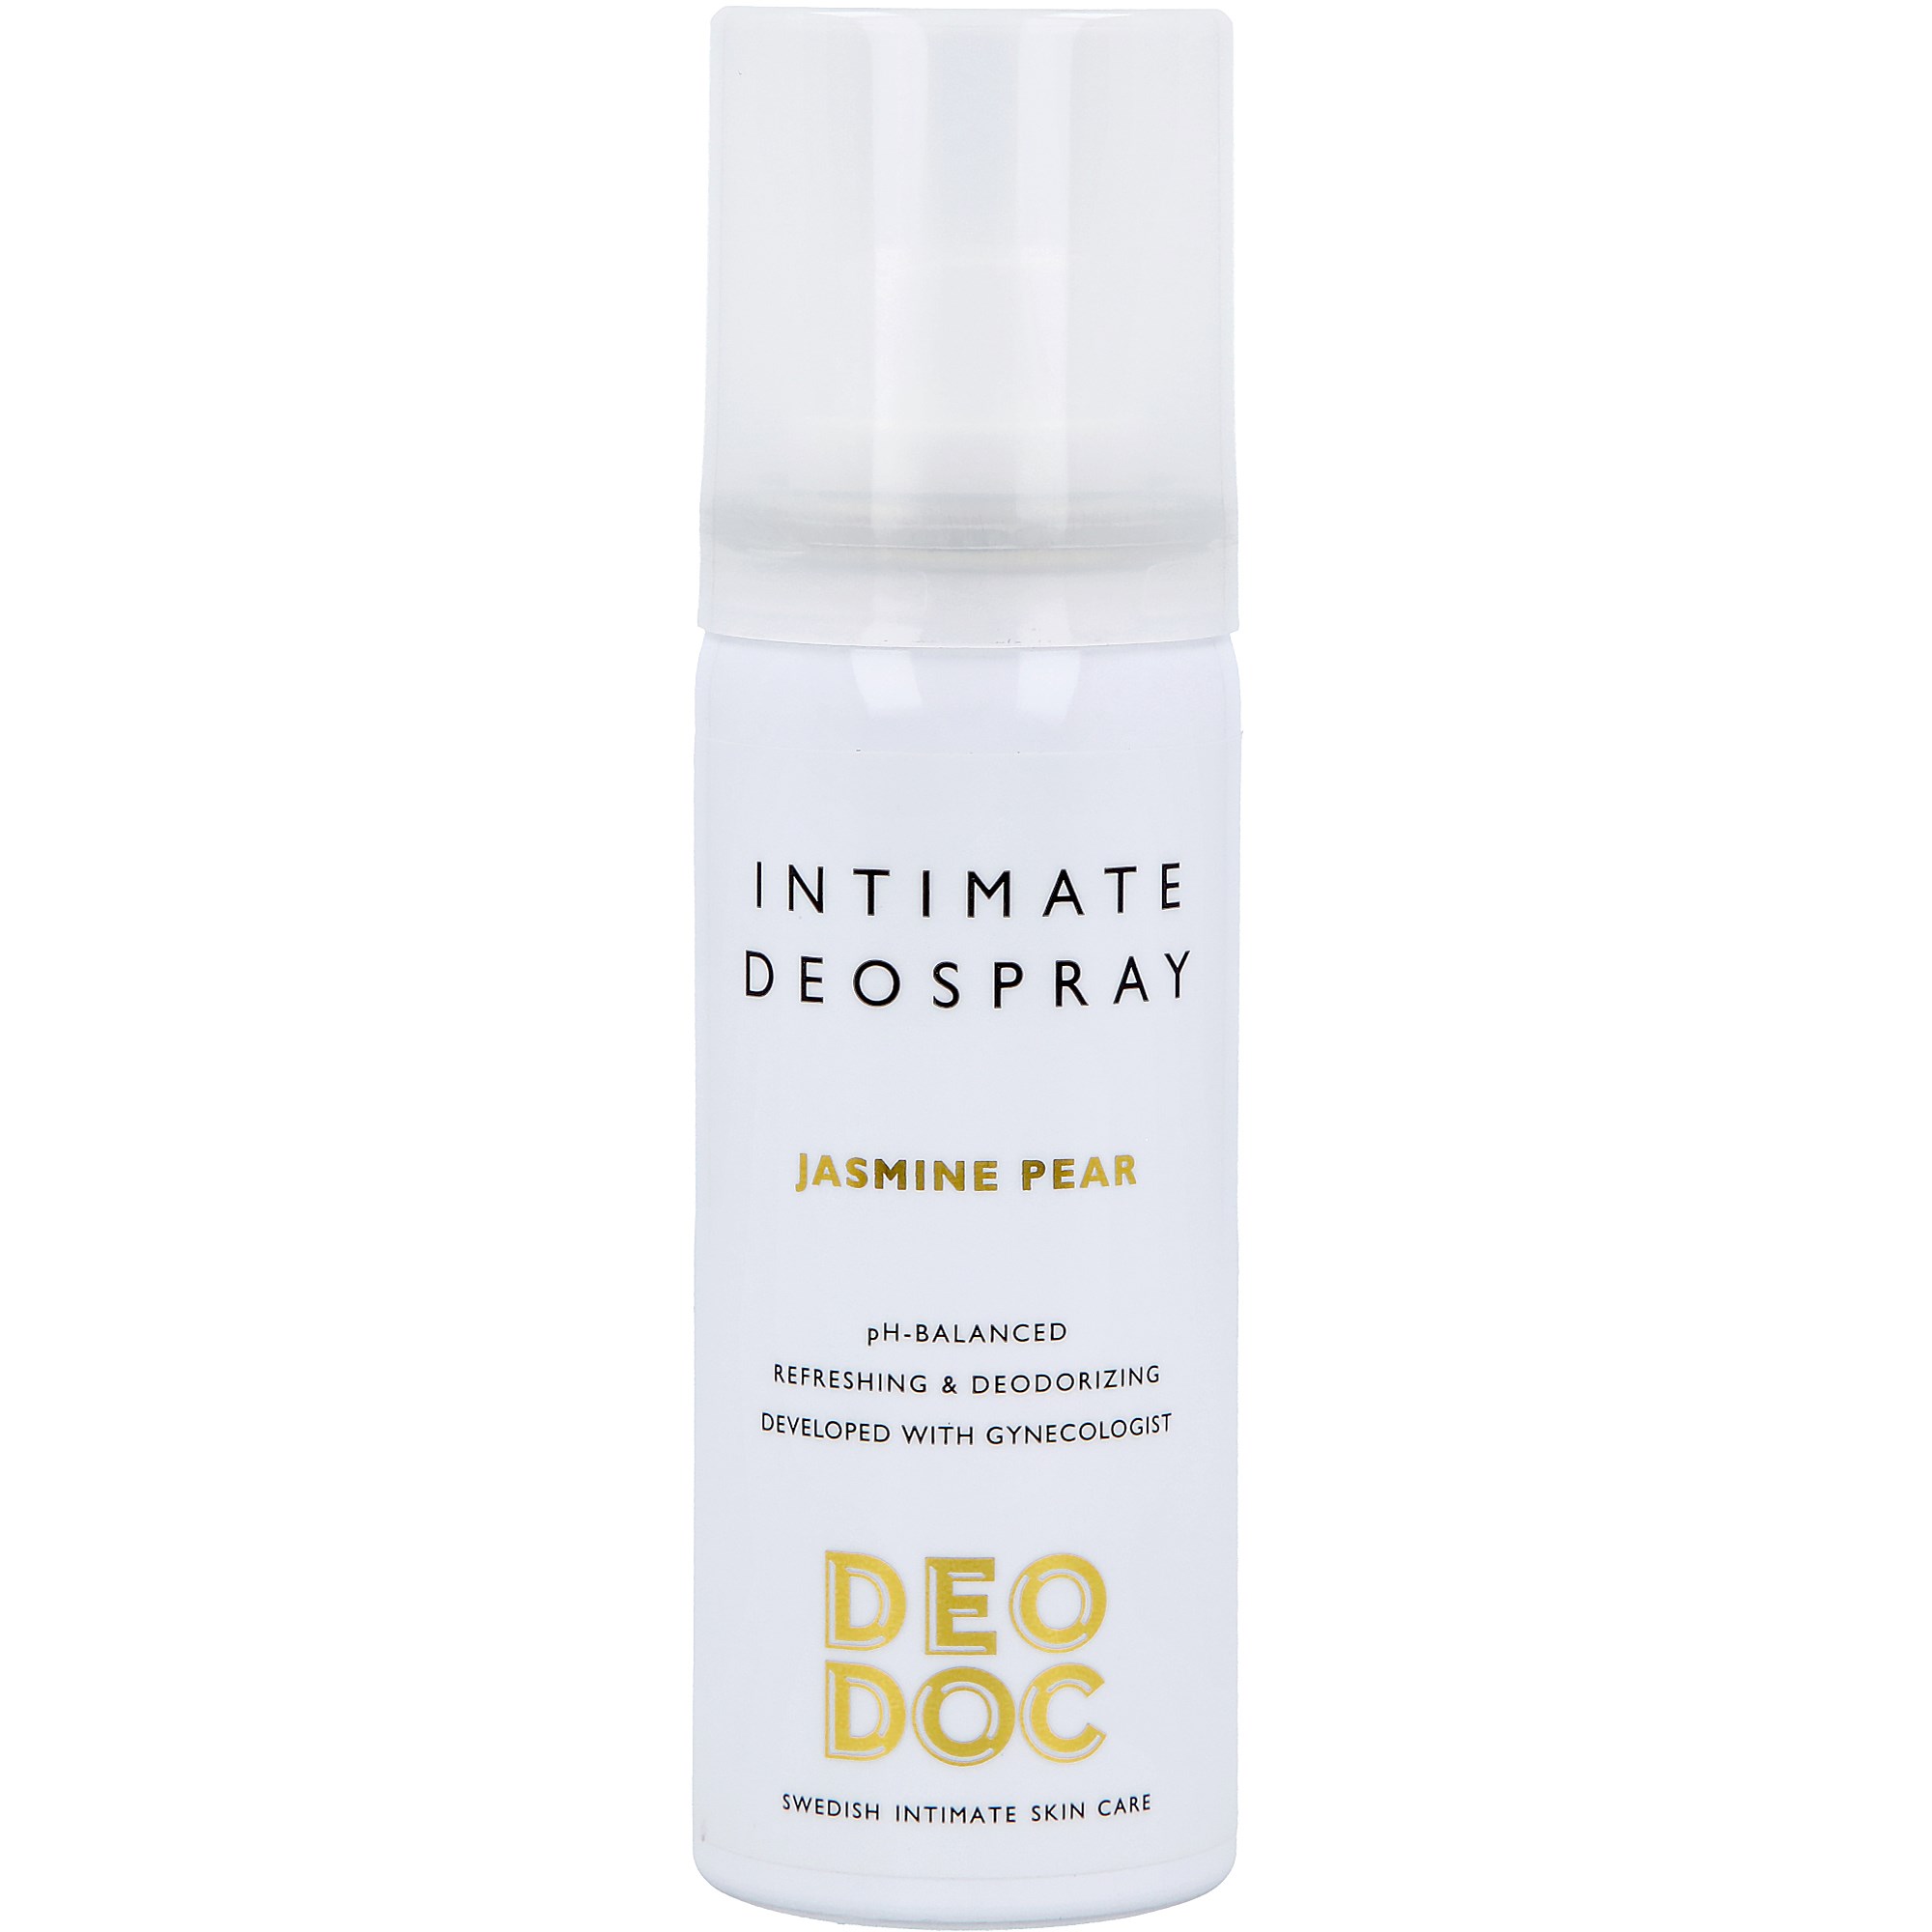 DeoDoc Intimate deospray 0 % aluminium Jasmine Pear 50 ml